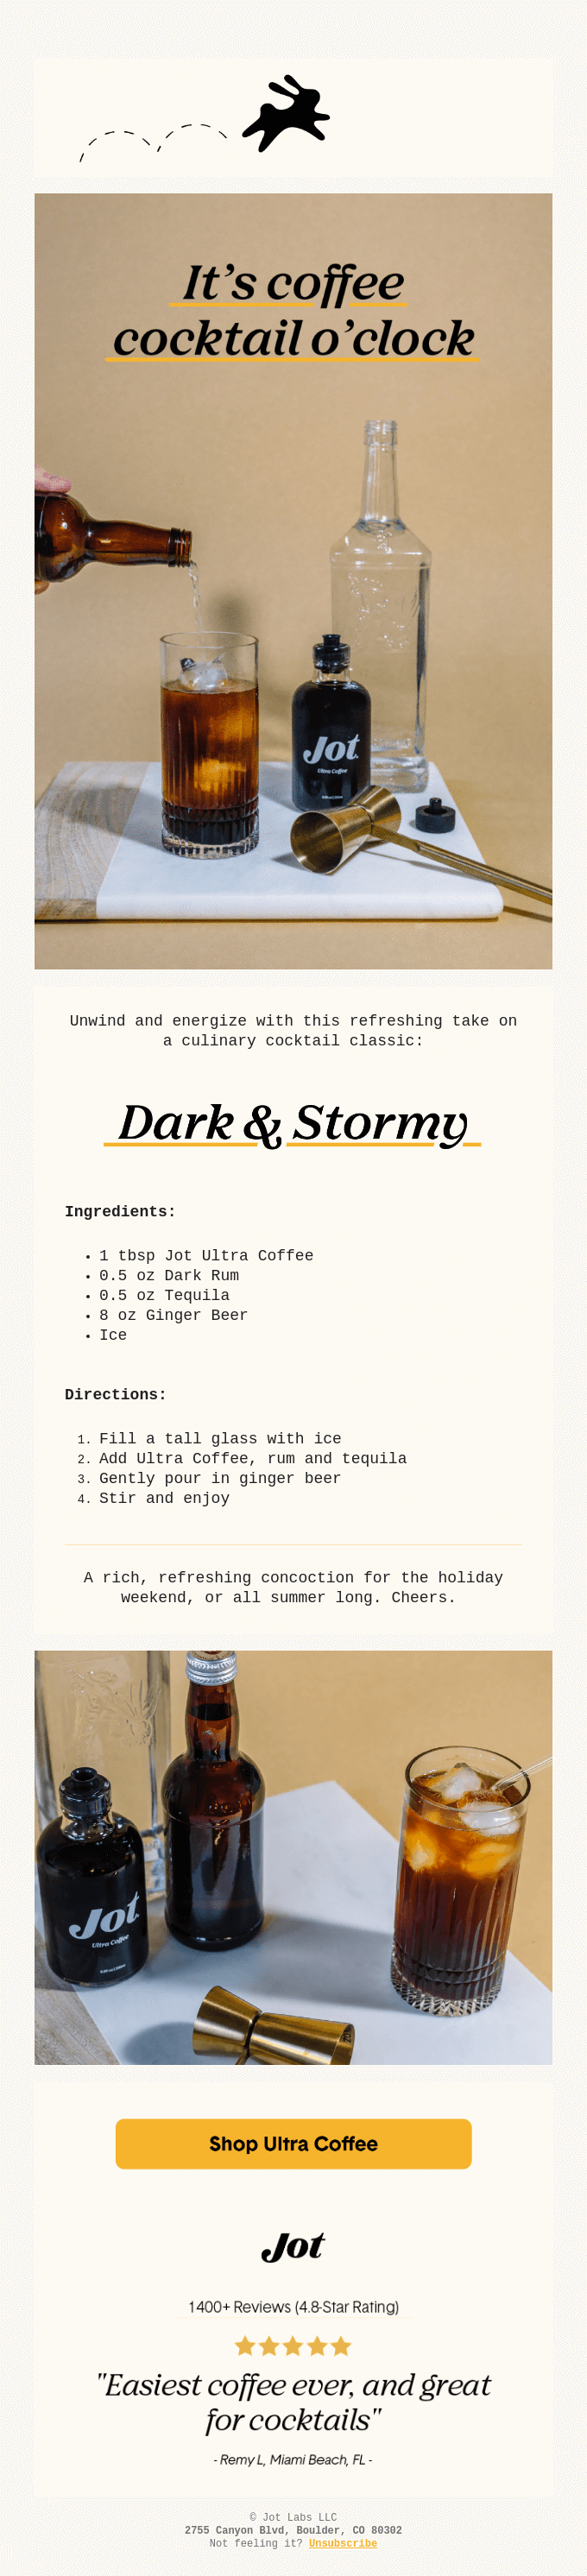 Make it a Dark & Stormy